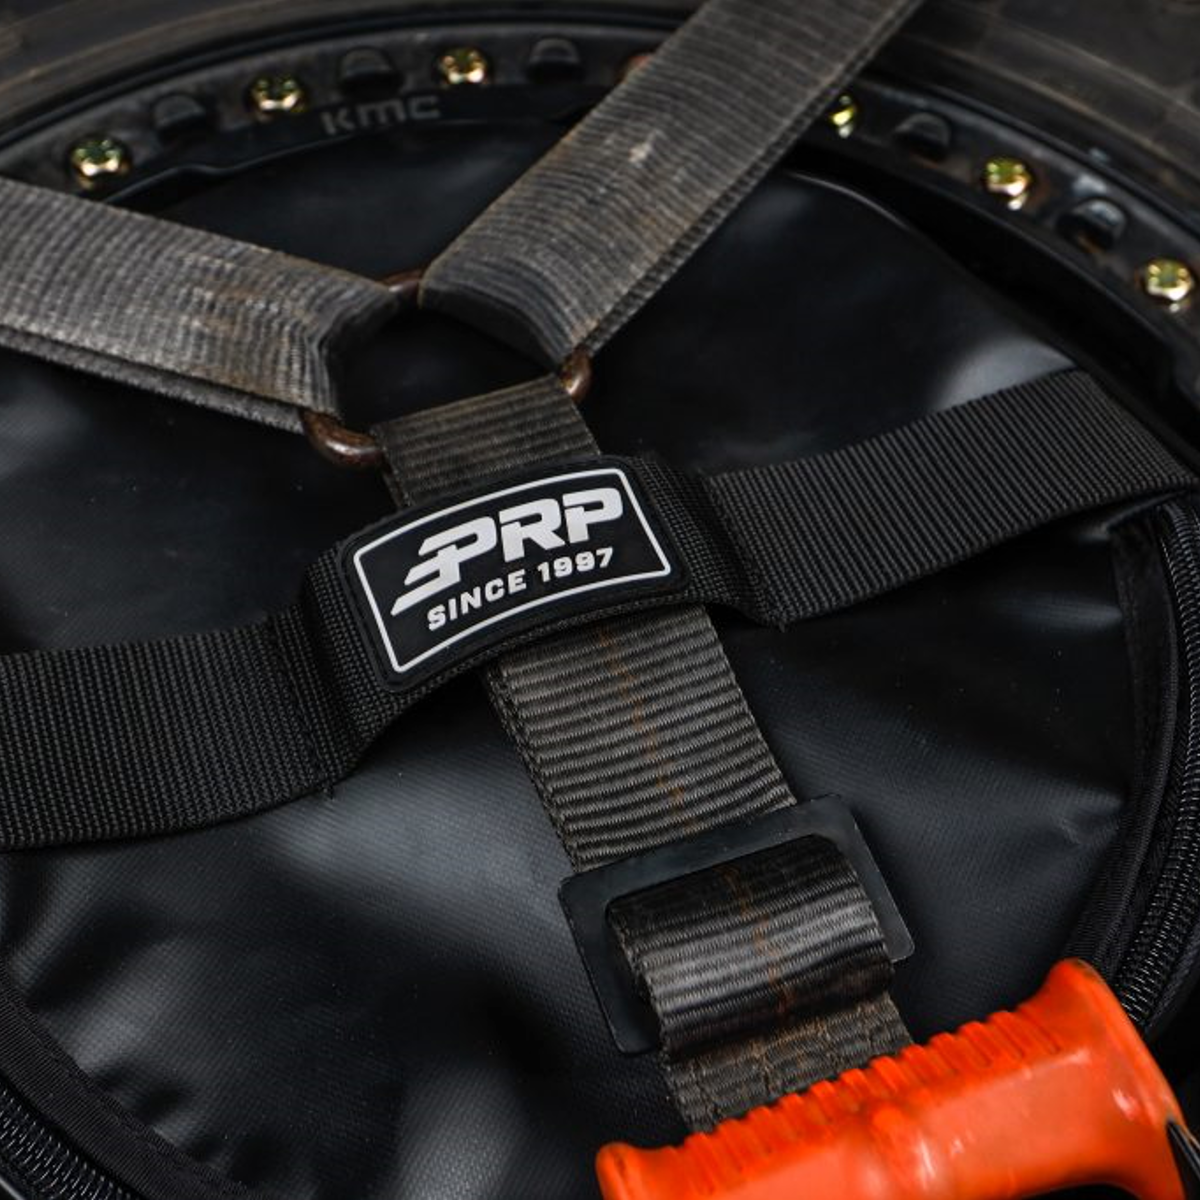 PRP Spare Tire Bag and Spare Drive Belt Bag for UTV's - BUNDLE